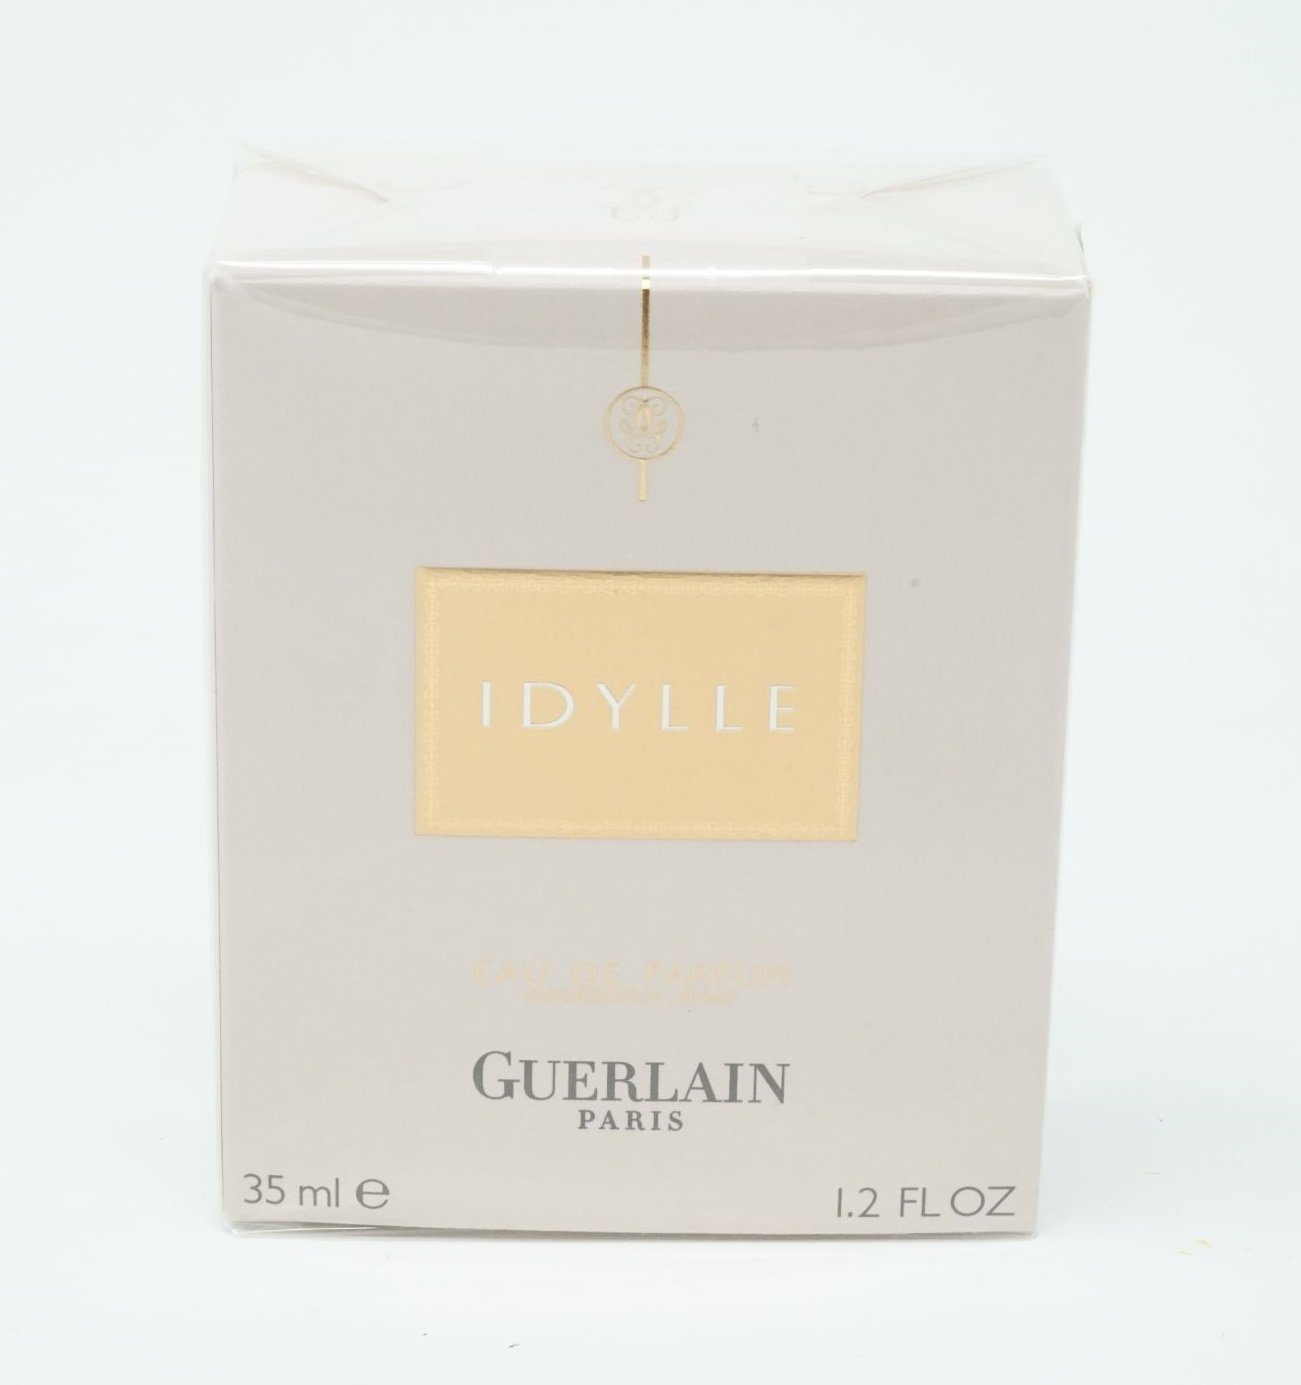 Parfum Parfum Guerlain de Idylle De Spray Eau 35ml Eau GUERLAIN